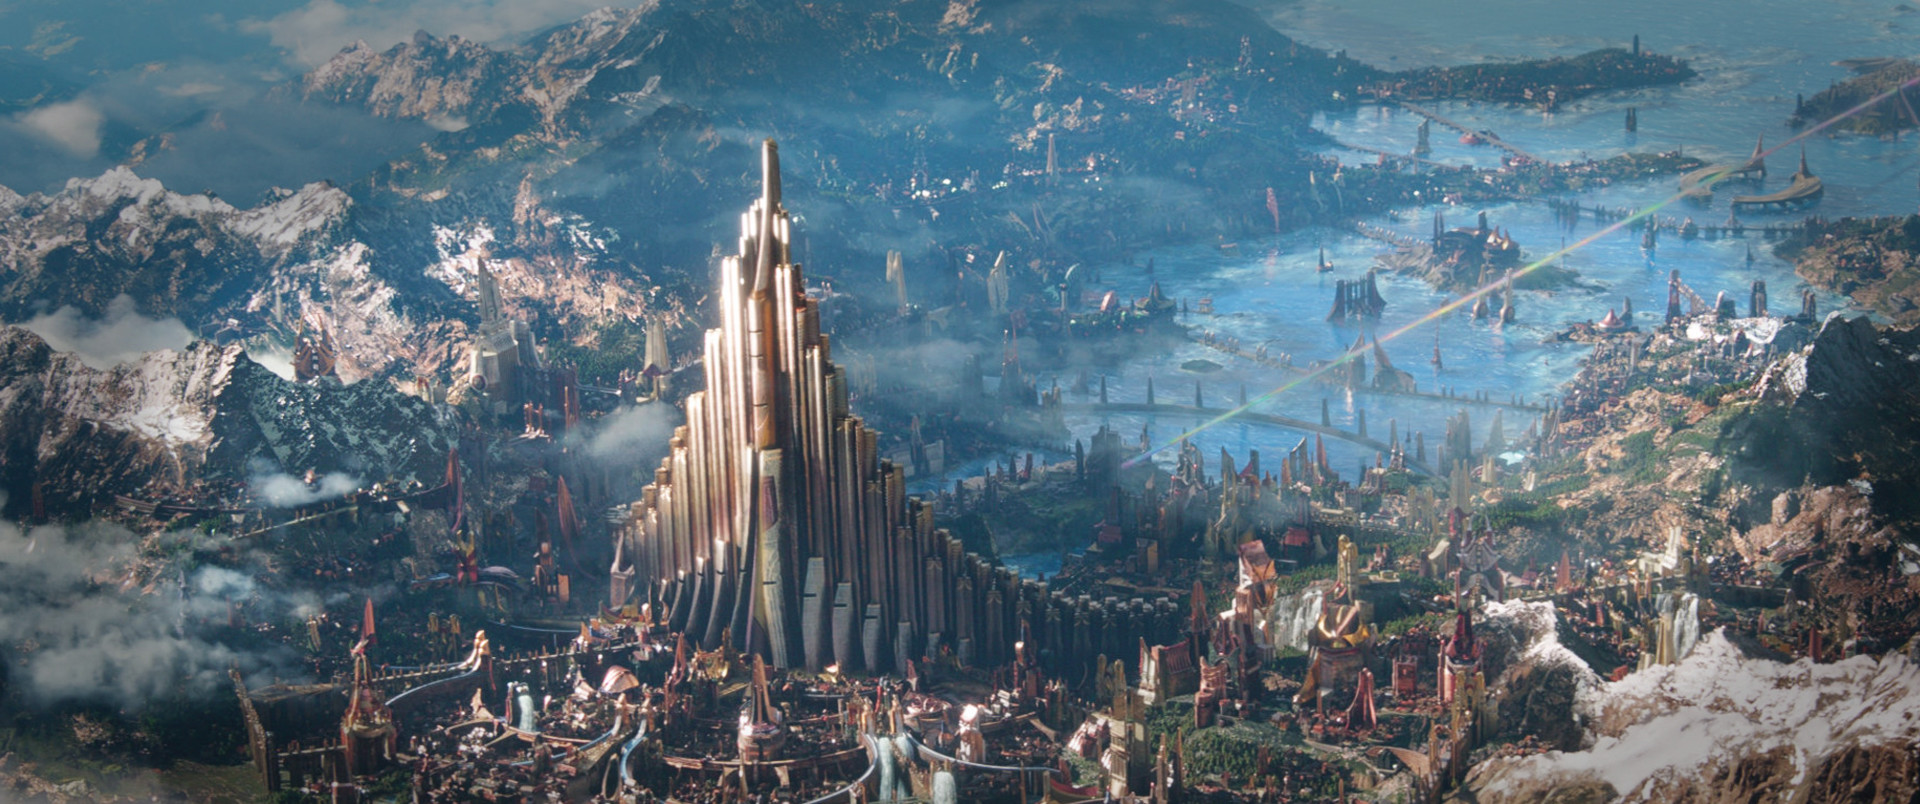 Asgard Buildings - THOR: RAGNAROK.